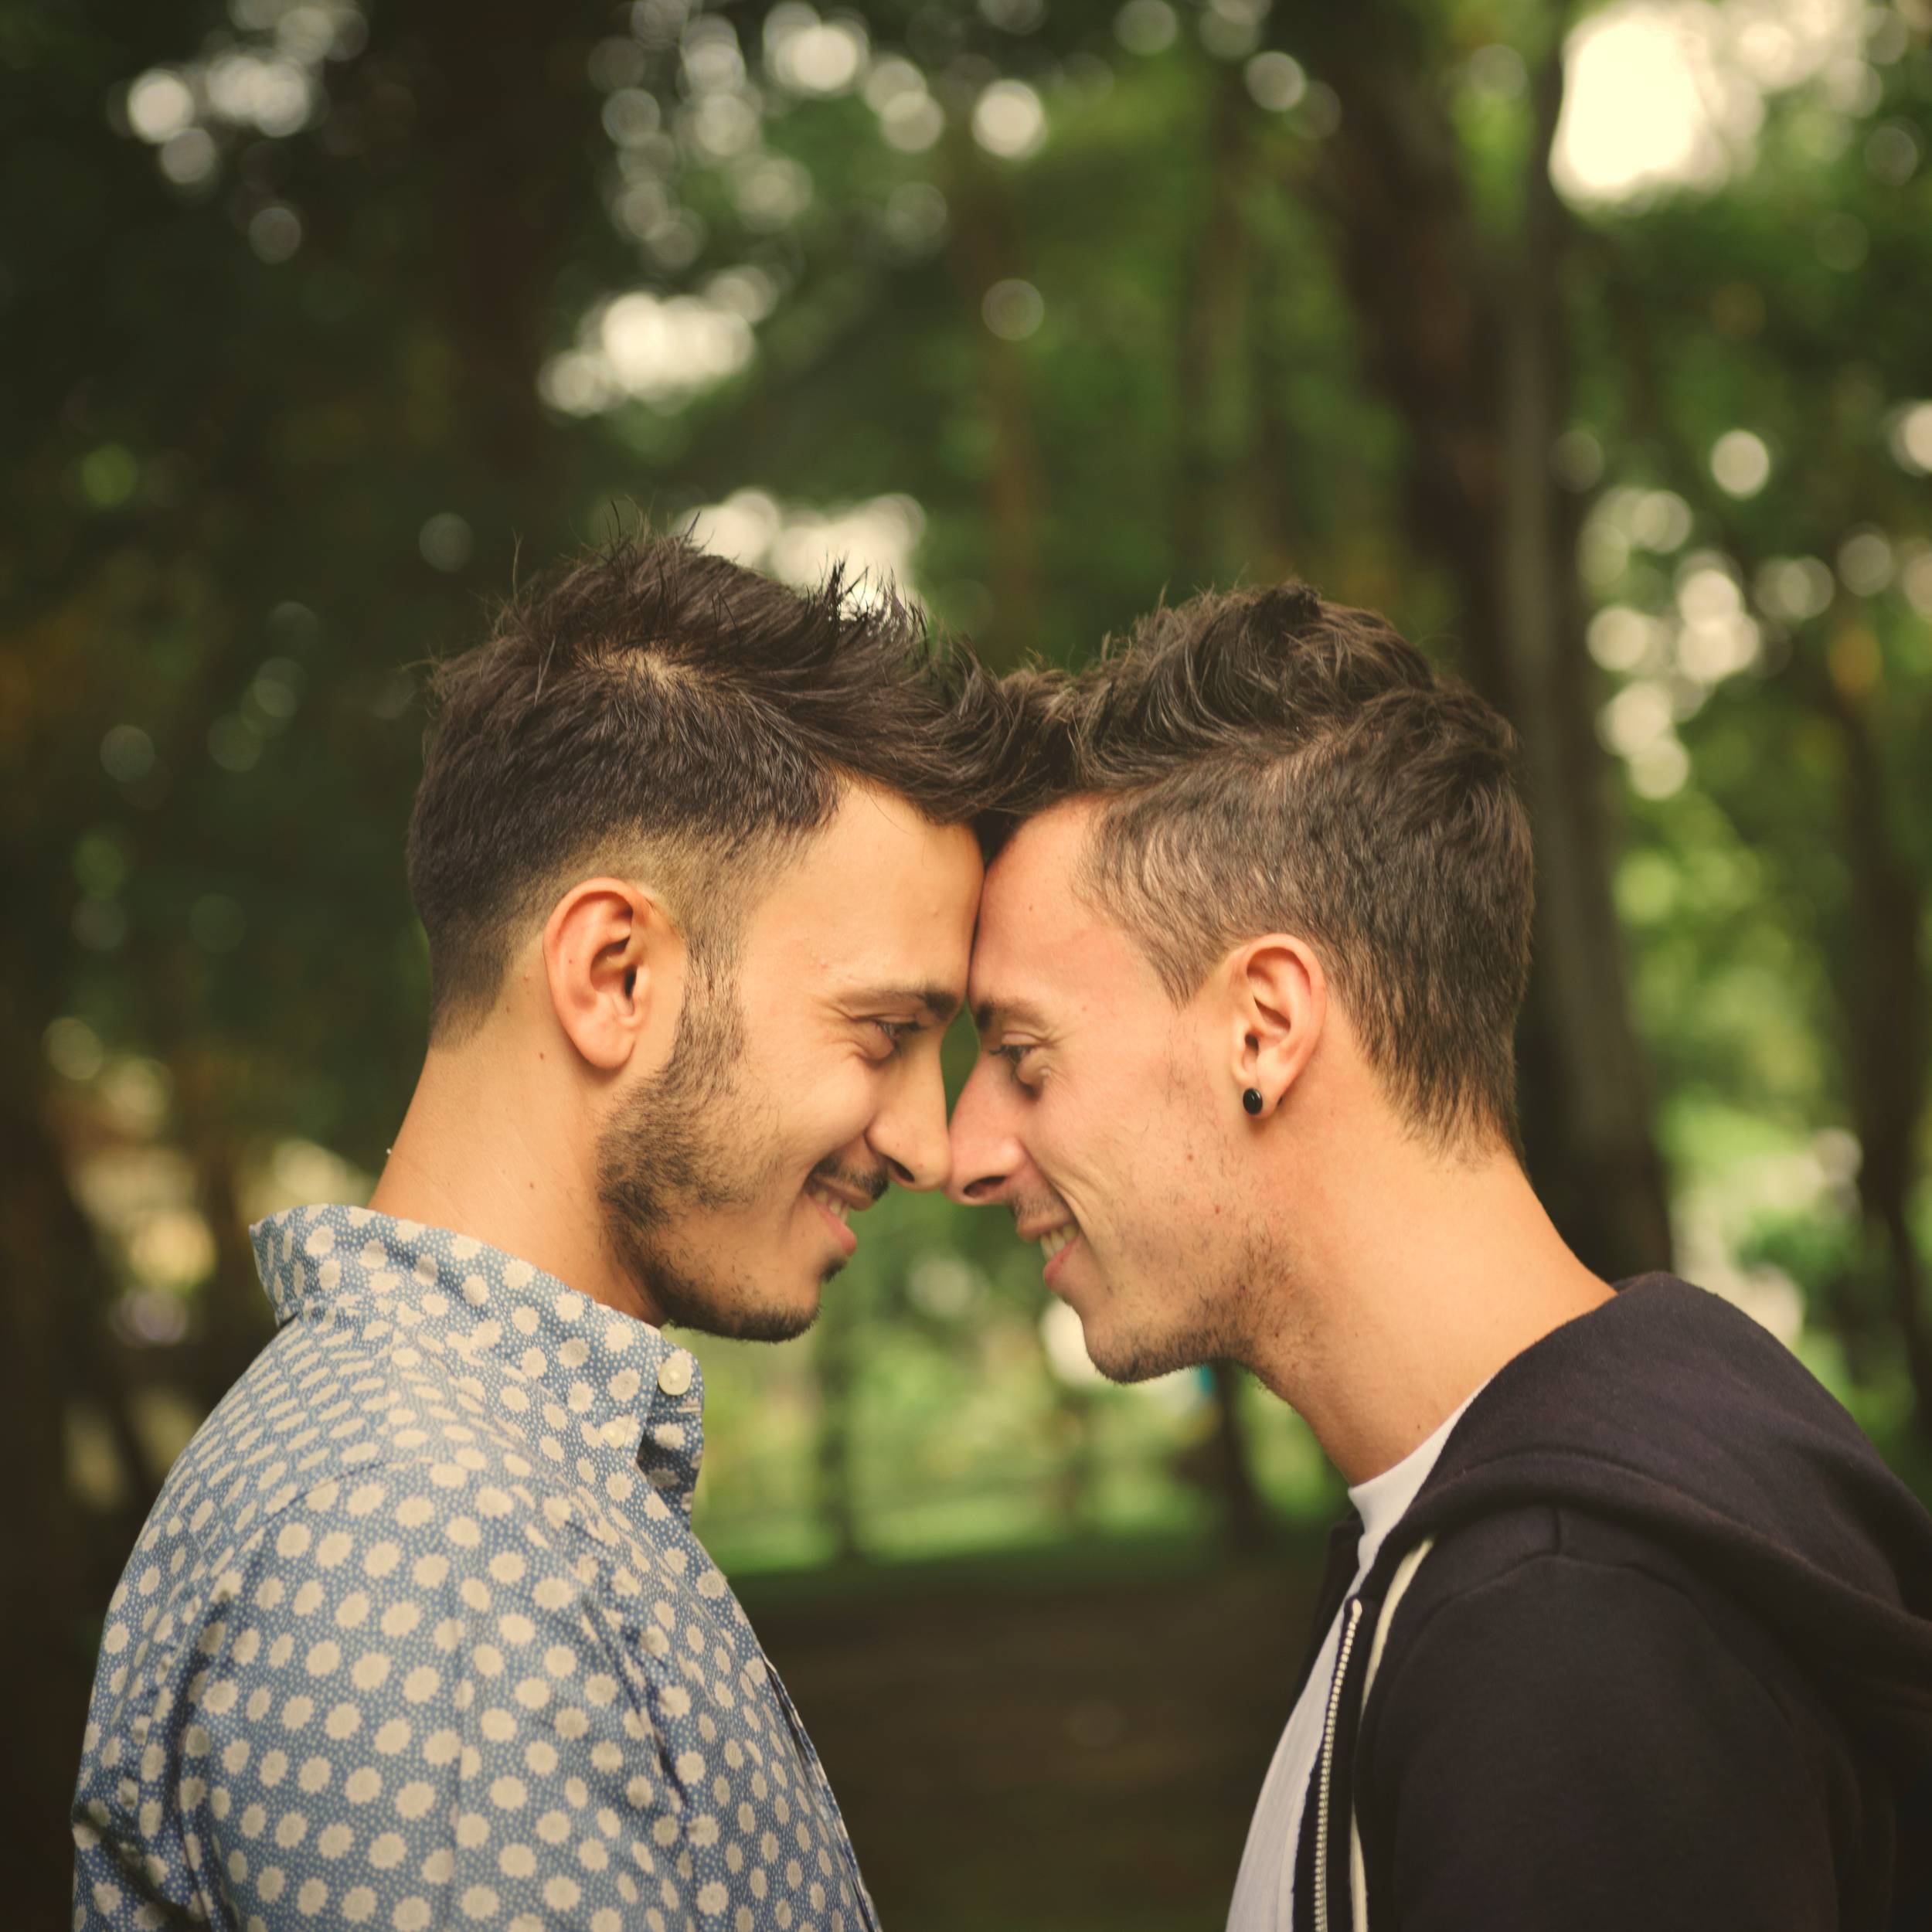 gay-couple-love-outdoors-concept-2022-12-16-00-36-22-utc_KaaPPPPoB.jpg